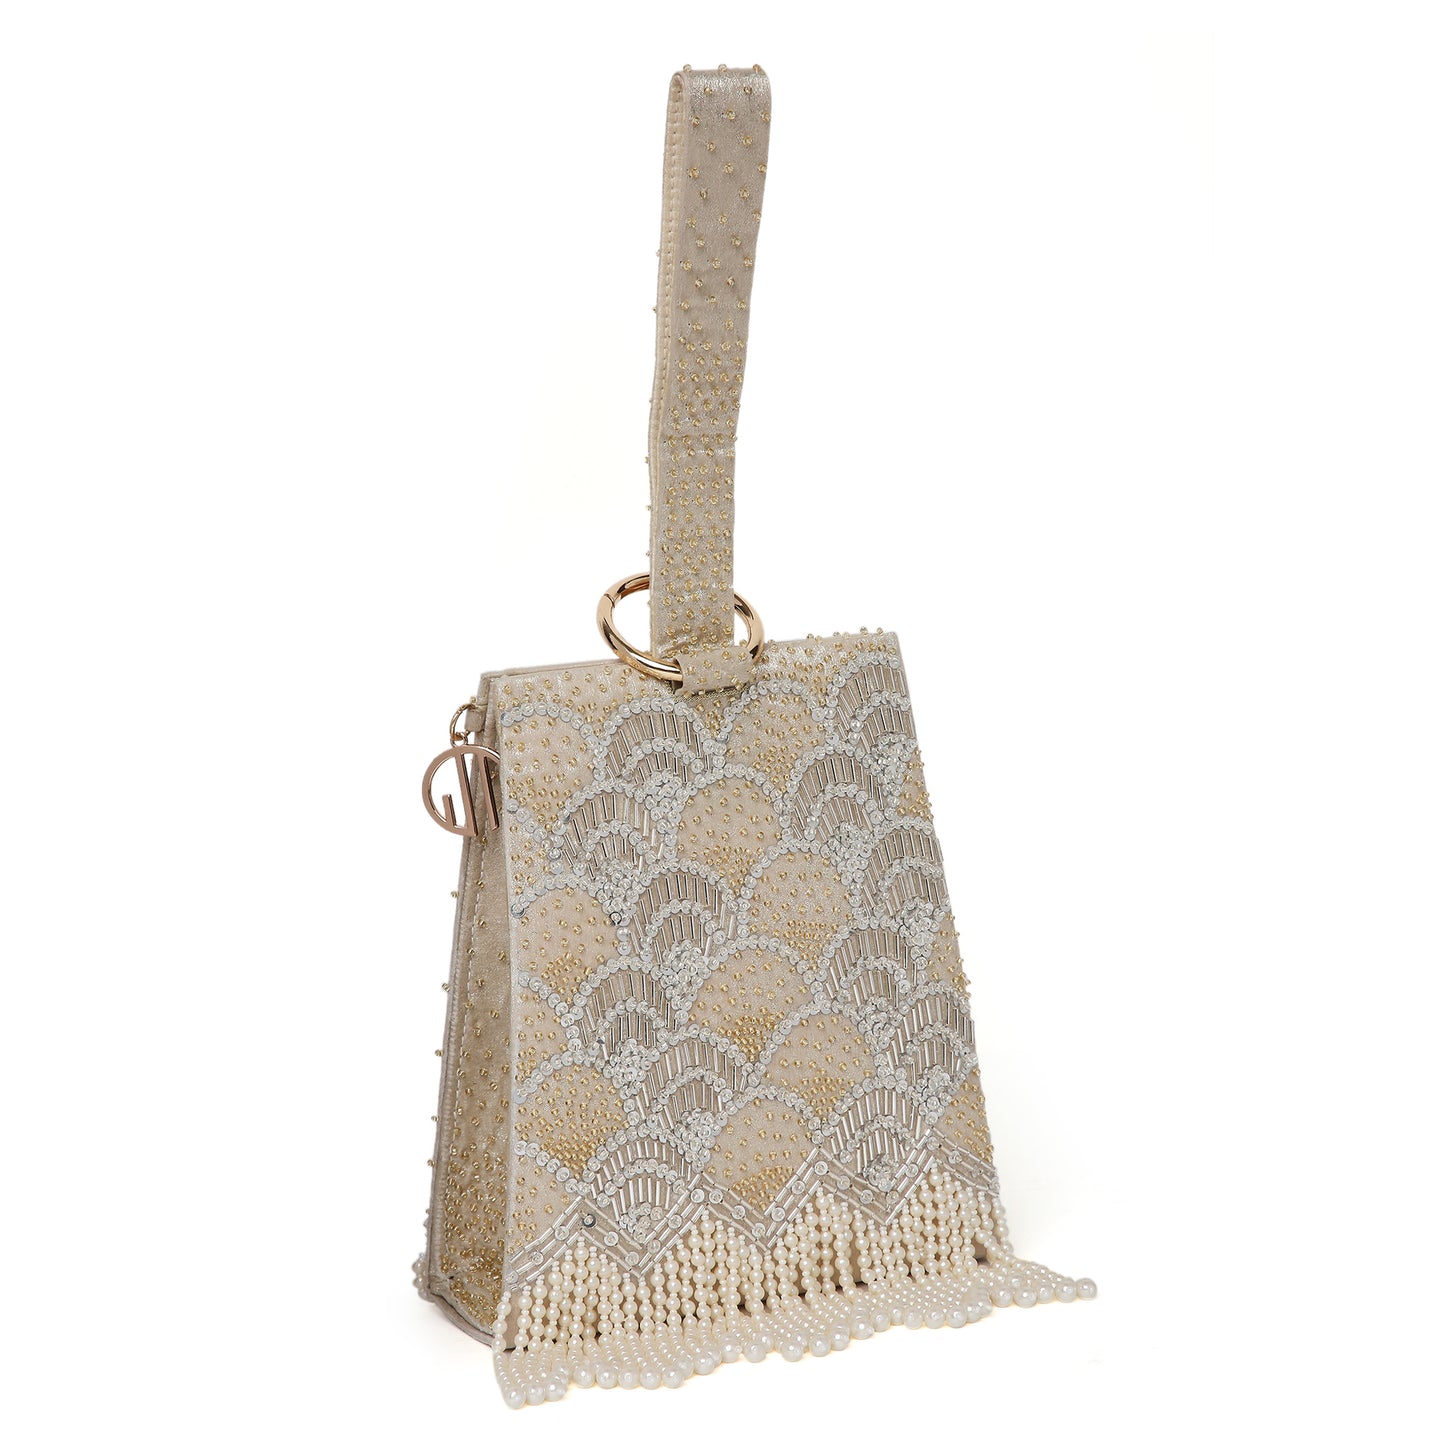 Rayna Gold embellished Handbag